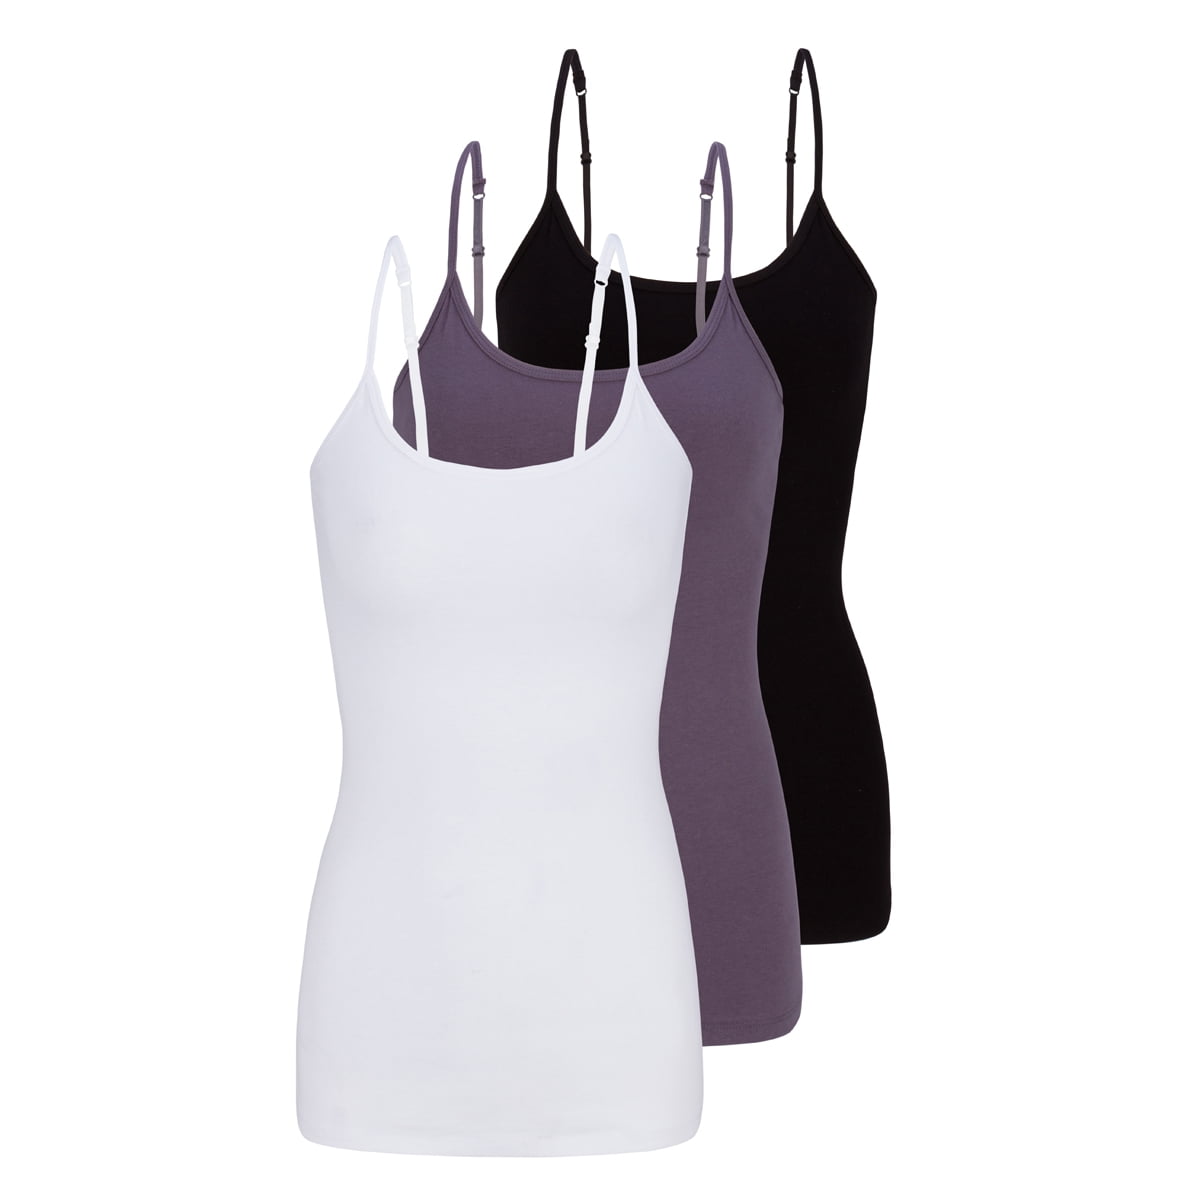 Felina Womens Cotton Modal Camisole, Adjustable Cotton Tank Top 3-Pack  (Black Grey Navy, Small)